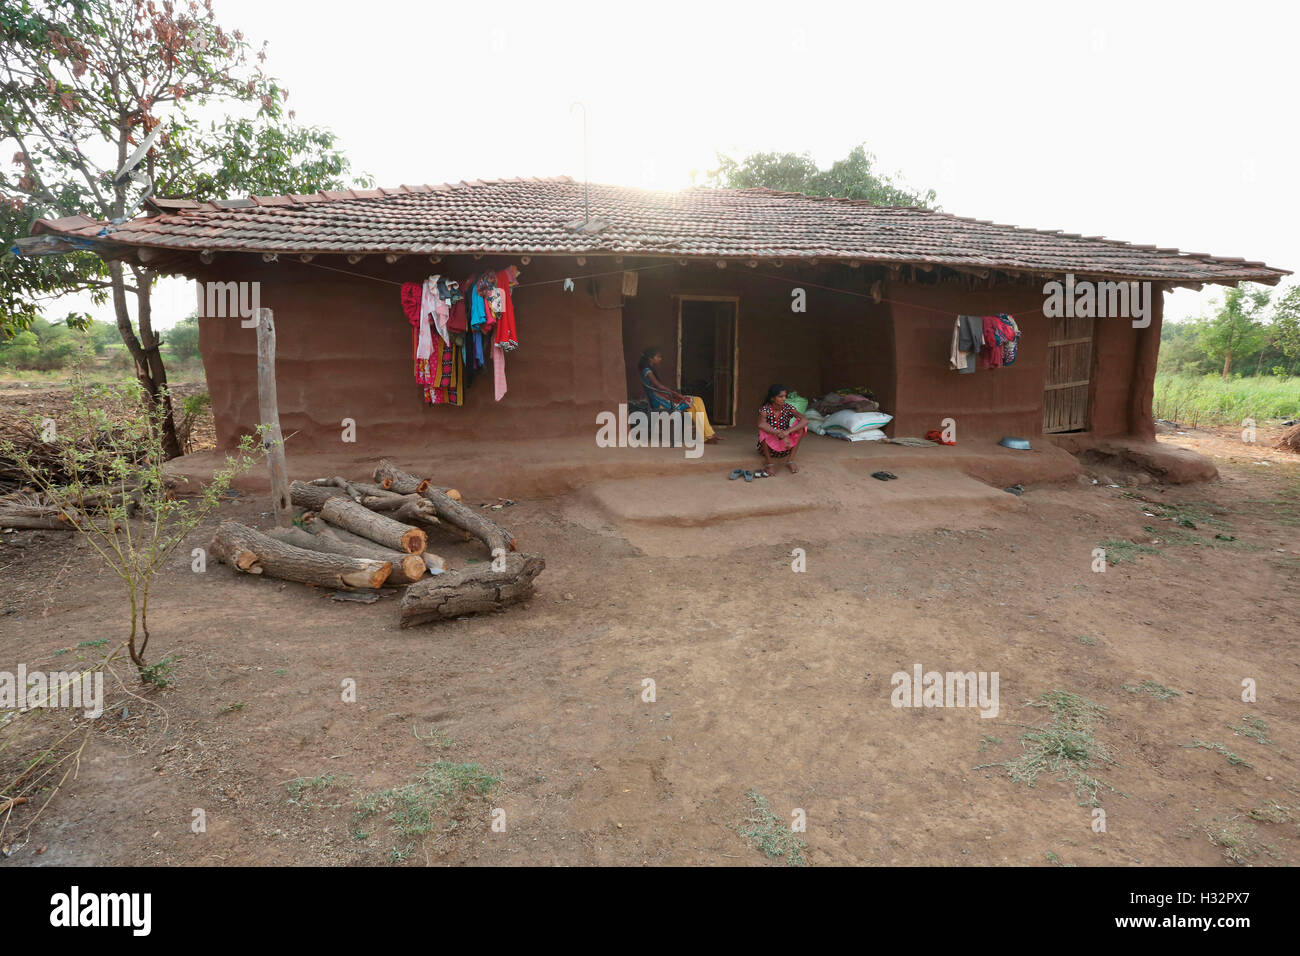 Casa Tradizionale VITOLIA tribù,Kalamkui Village, Valod Tehsil, tapi distretto, Gujrat, India Foto Stock